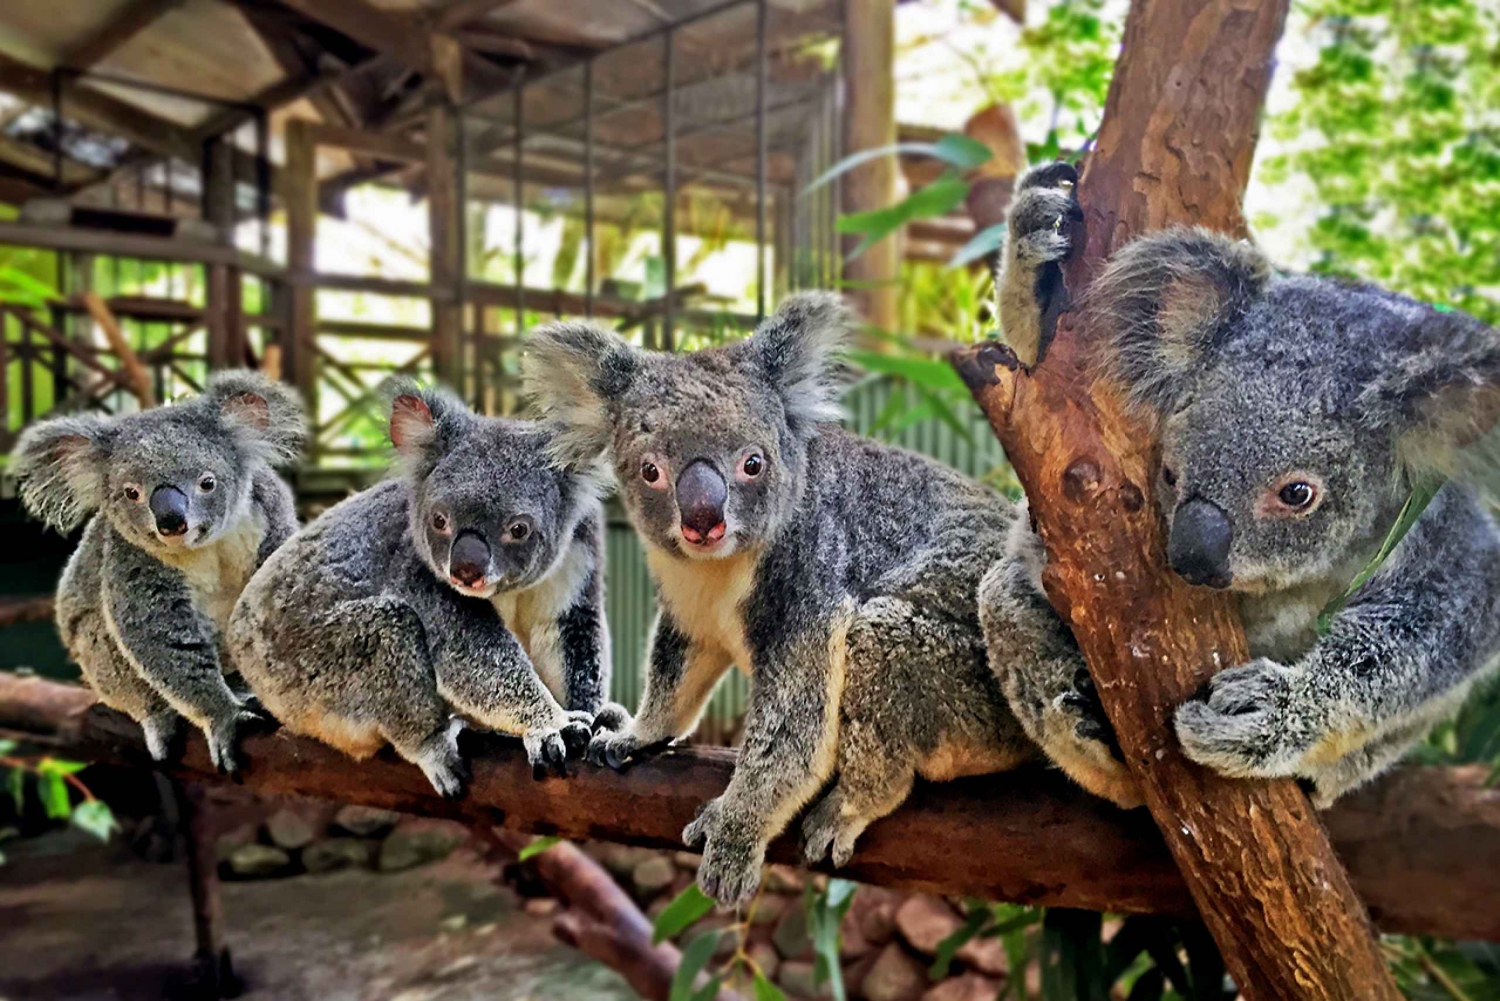 Cairns: Best of the Kuranda Rainforest Full-Day Tour & Lunch